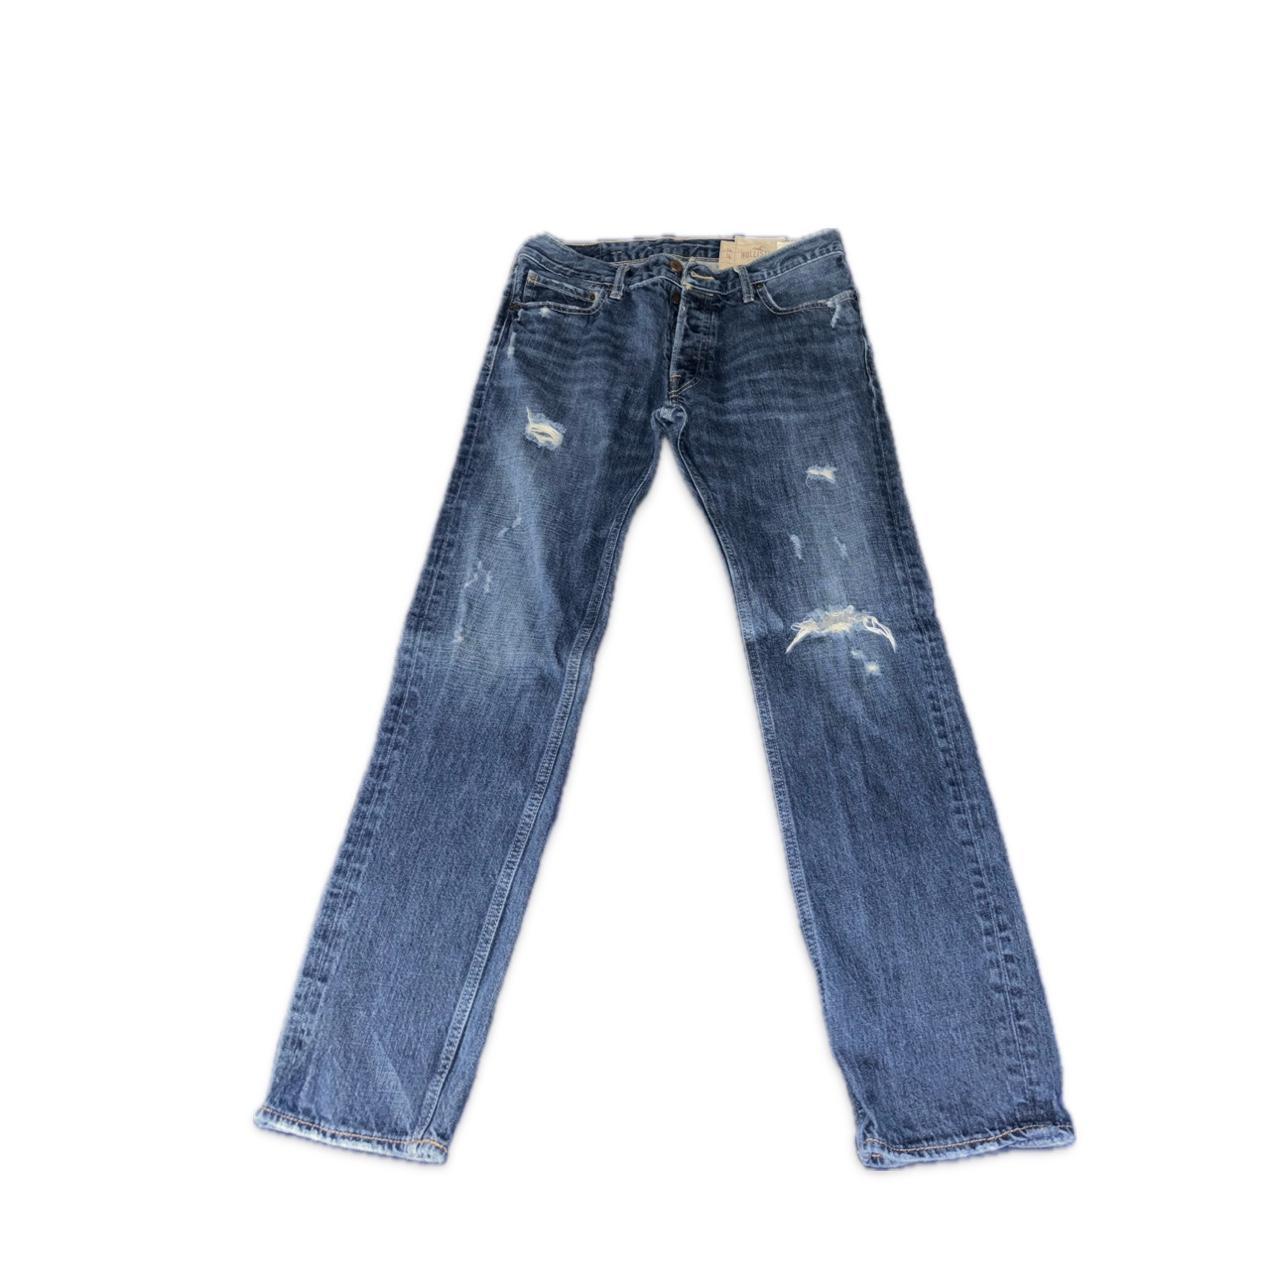 Hollister ripped jeans. #hollister #jeans - Depop